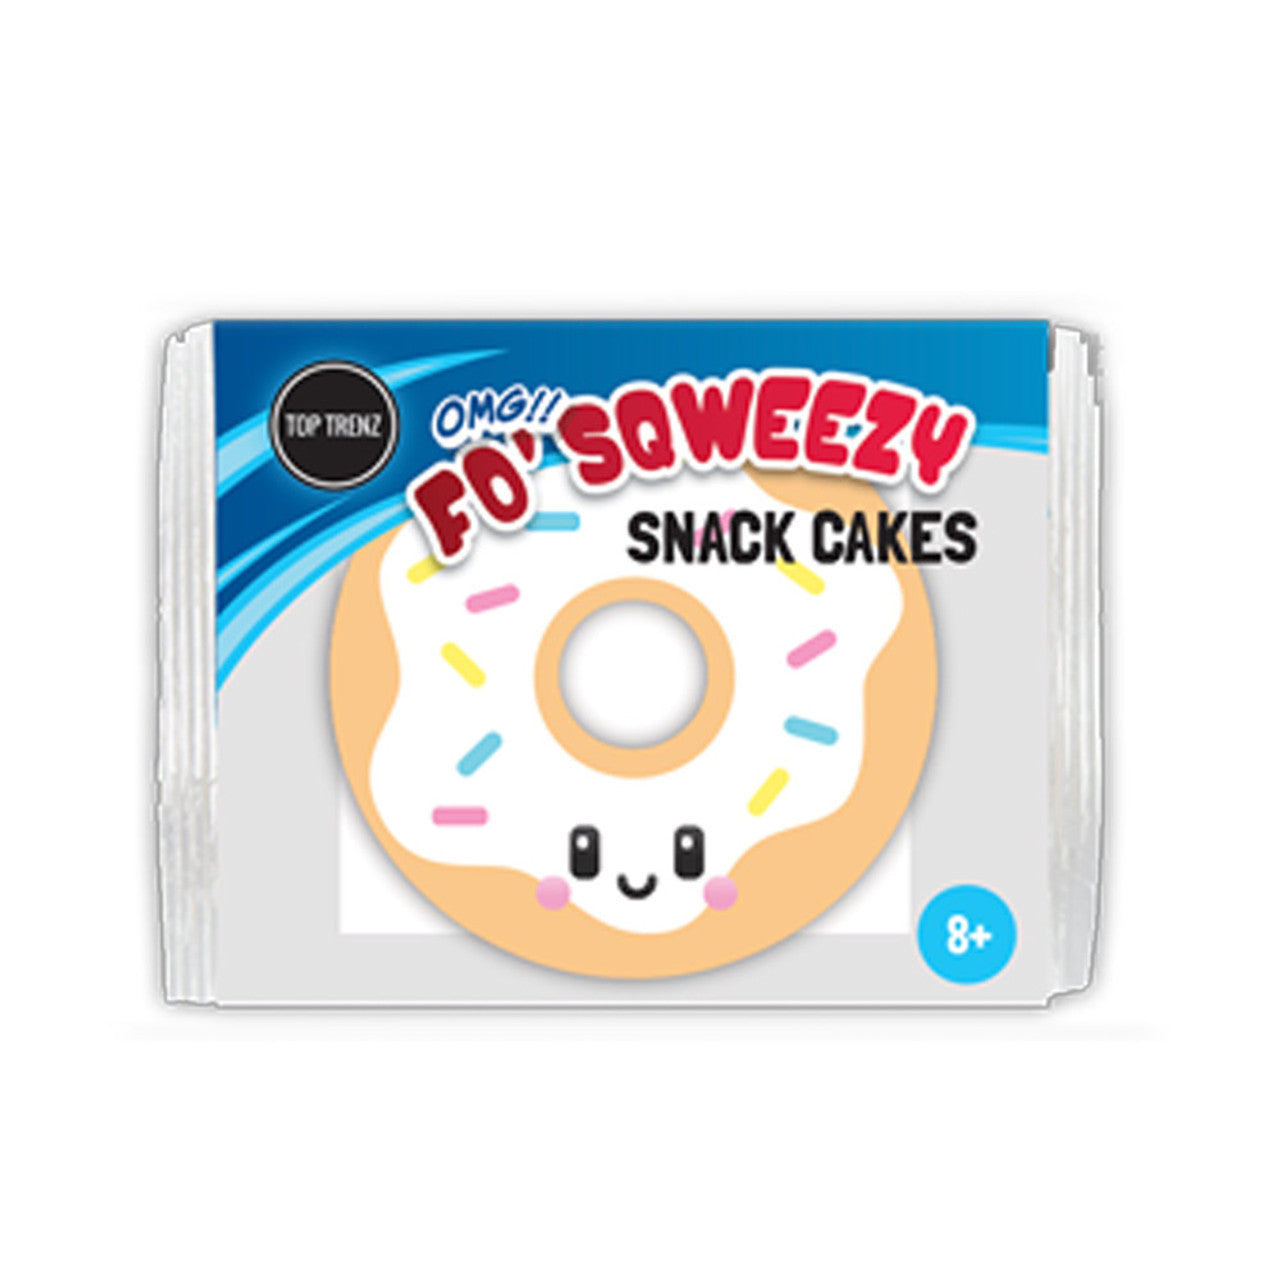 OMG Fo' Sqweezy Snack Cakes - Twinkies